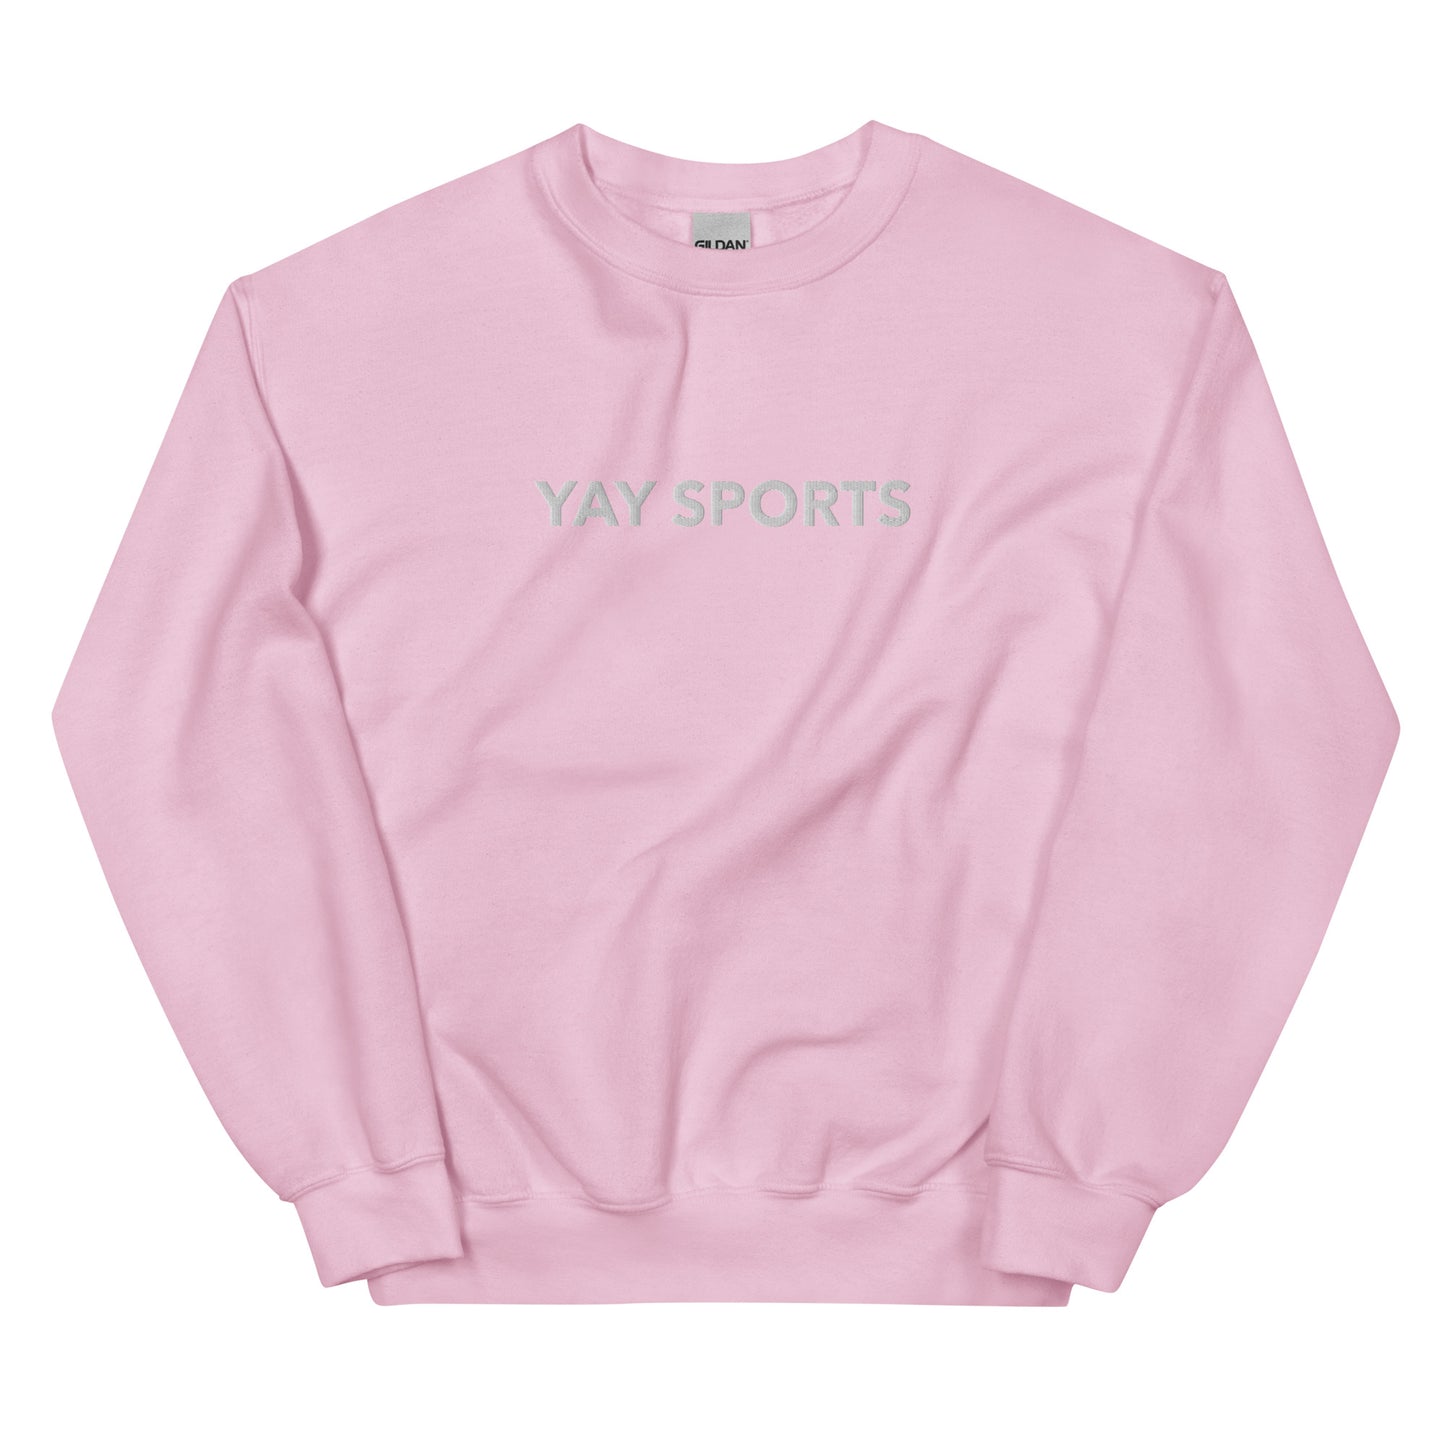 Yay Sports Premium Sweatshirt